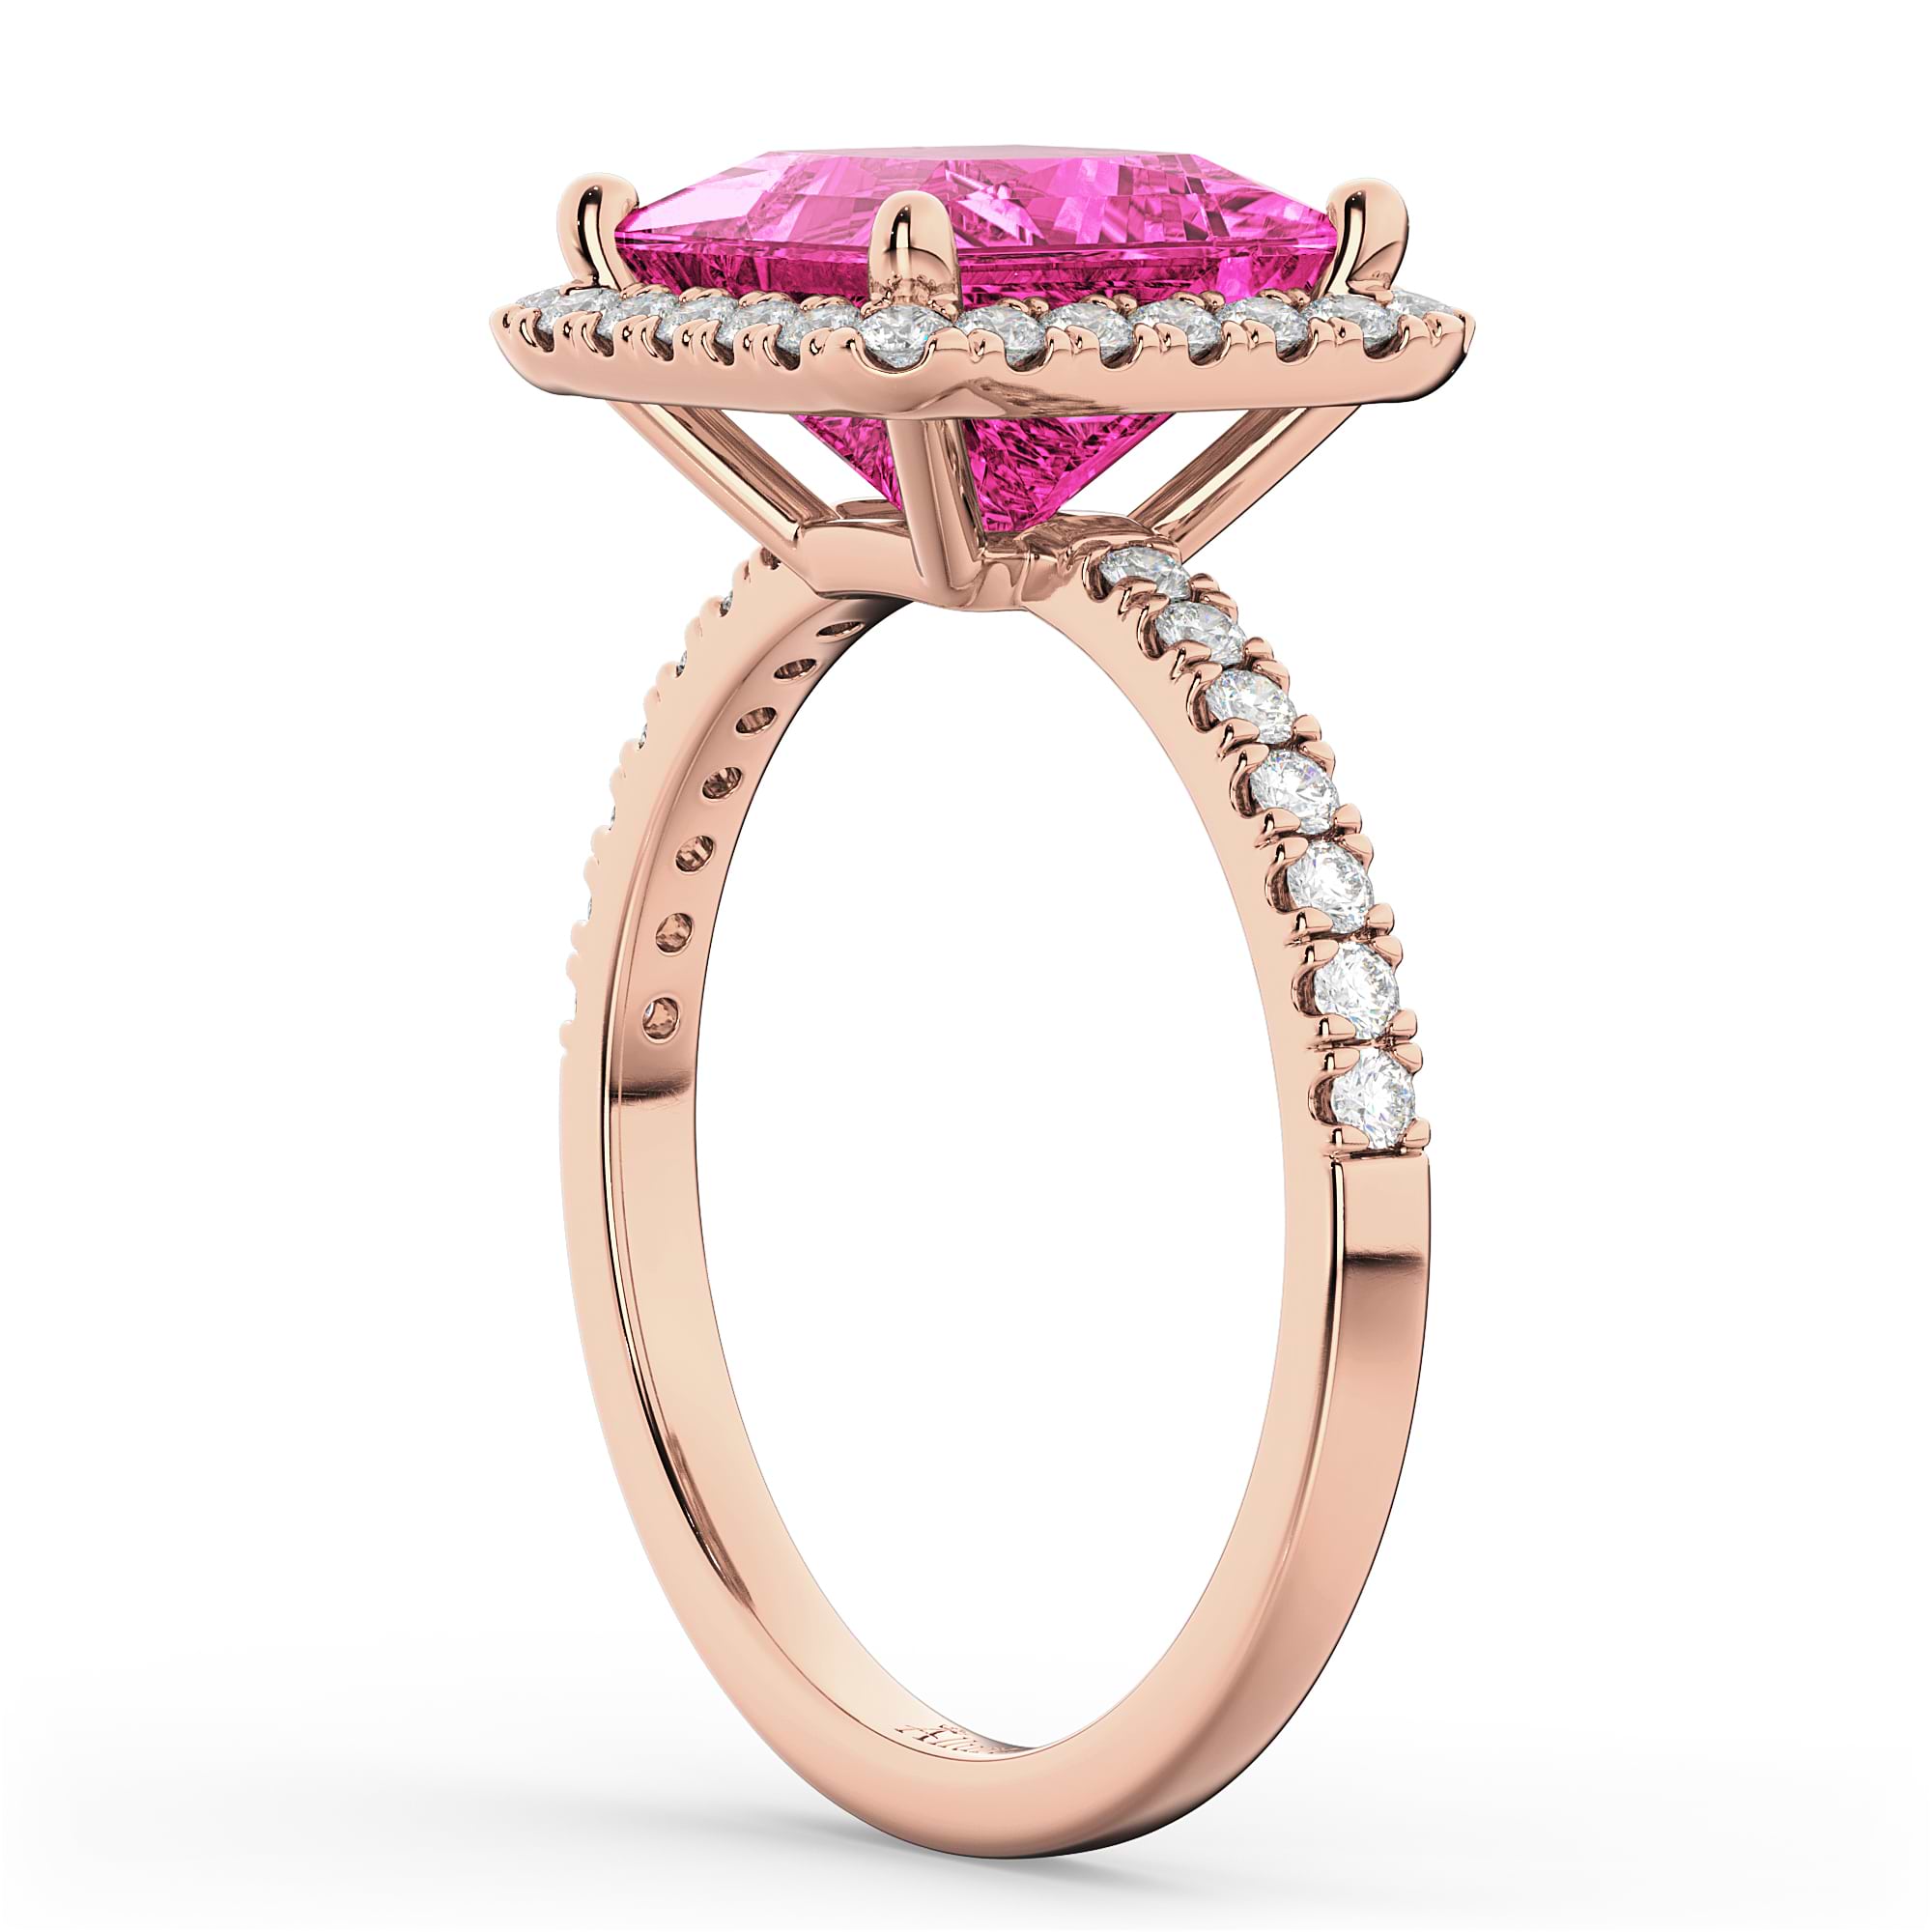 Princess Cut Halo Pink Tourmaline & Diamond Engagement Ring 14K Rose Gold 3.47ct